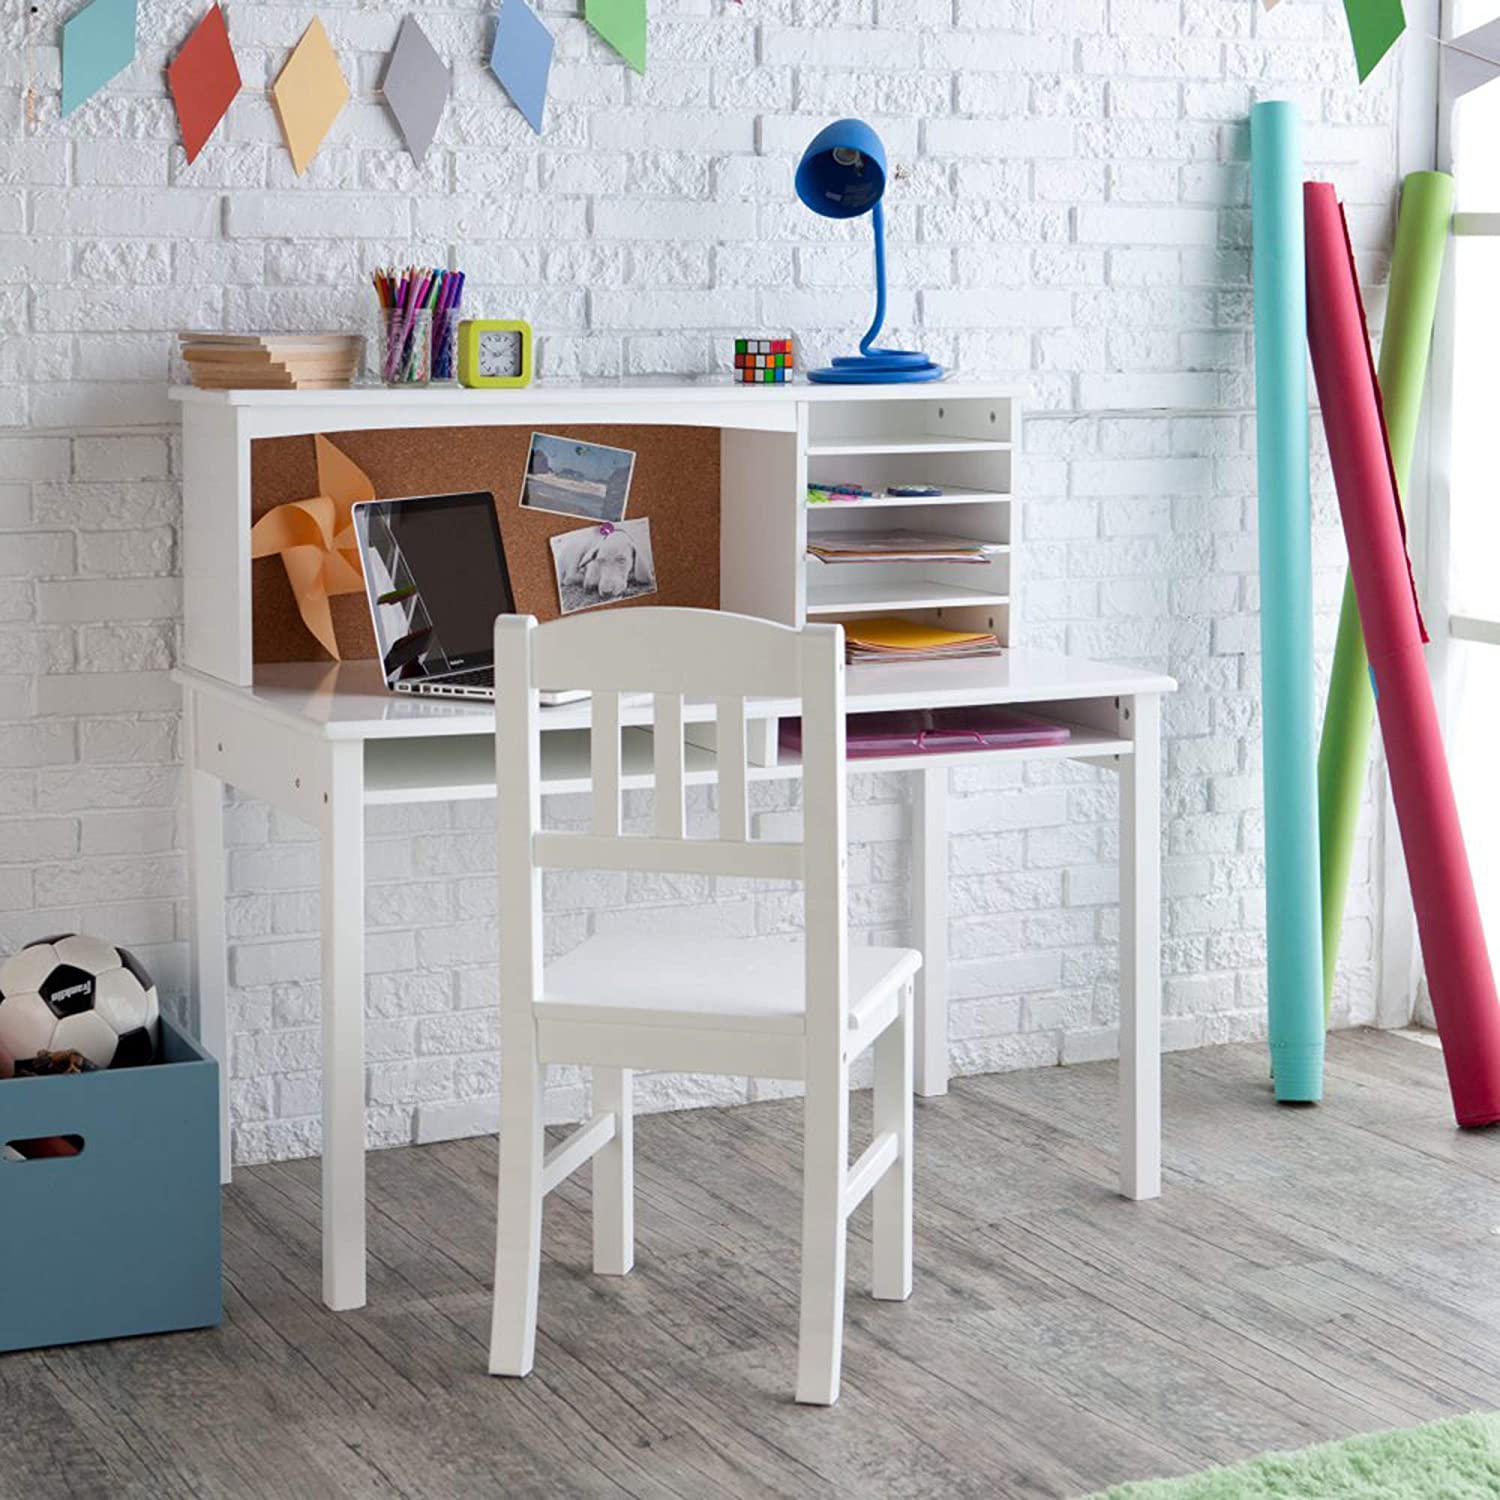 Guidecraft Children’s Media Desk and Chair Set White: Student Study Computer Workstation, Wooden Kids Bedroom Furniture